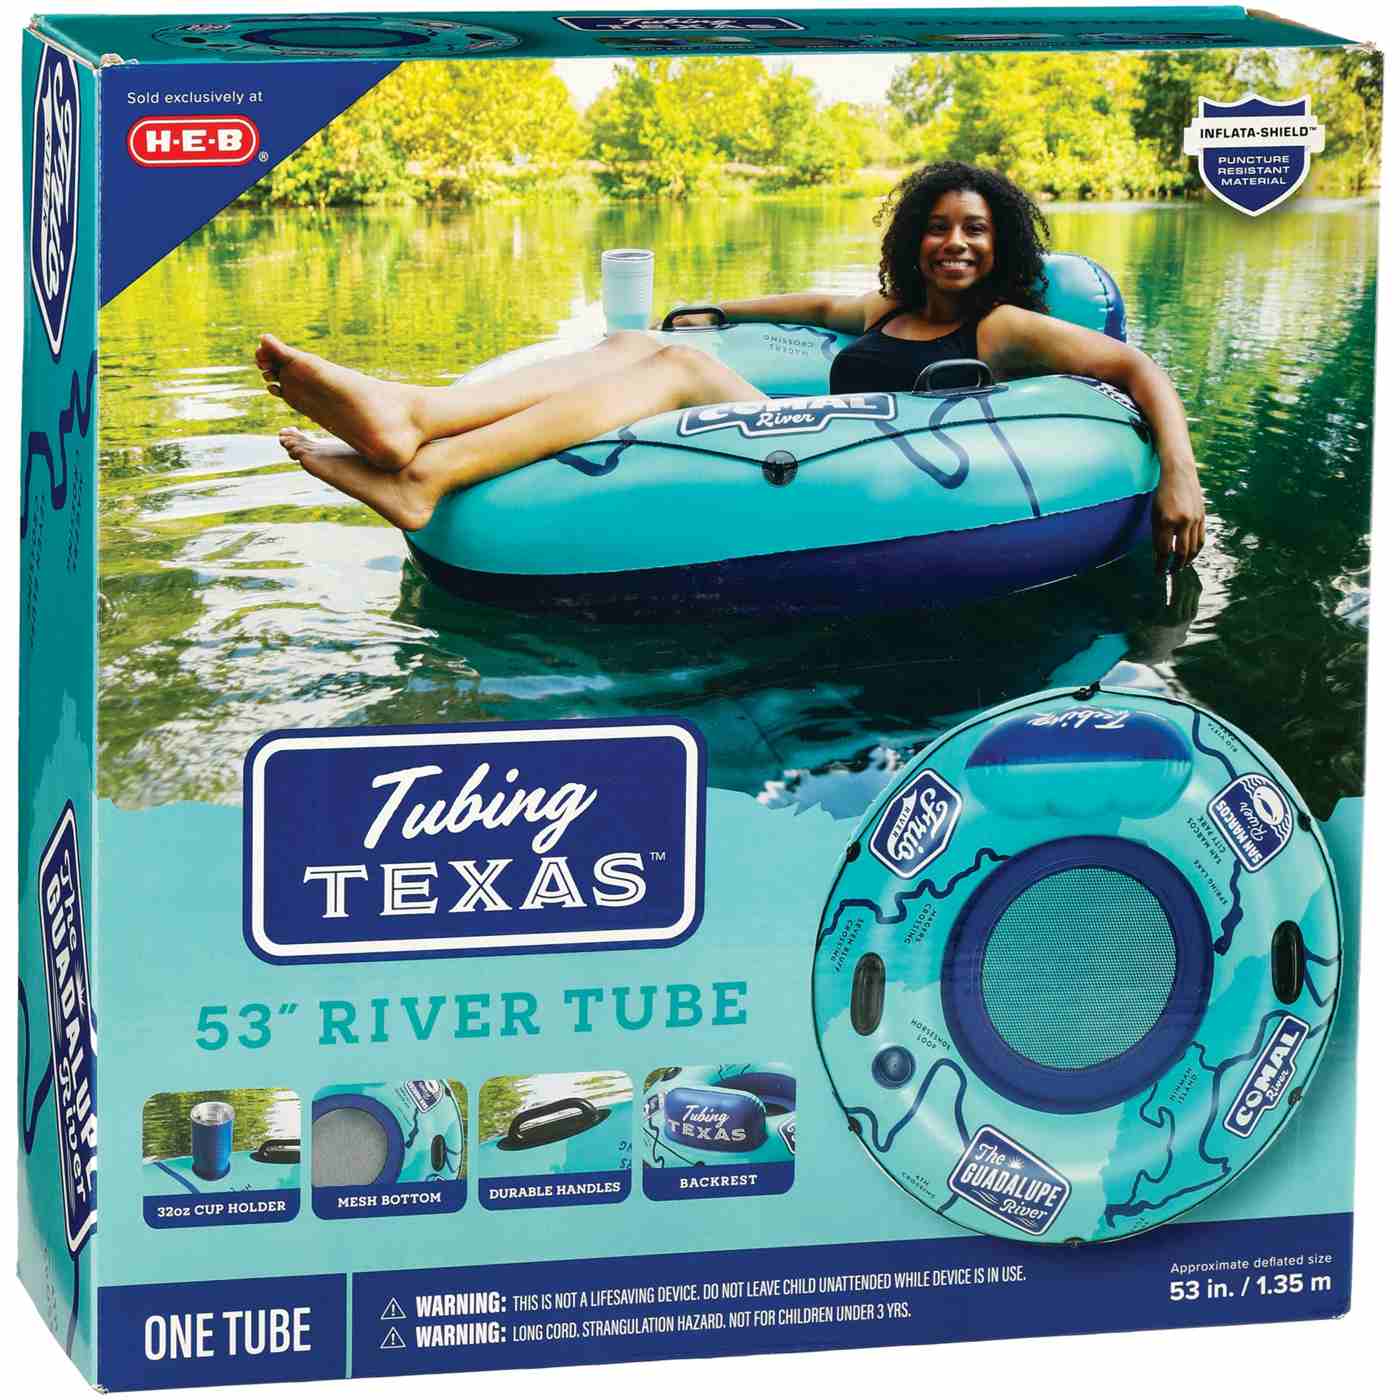 H-E-B Tubing Texas Inflatable River Tube - Teal - Shop Floats at H-E-B